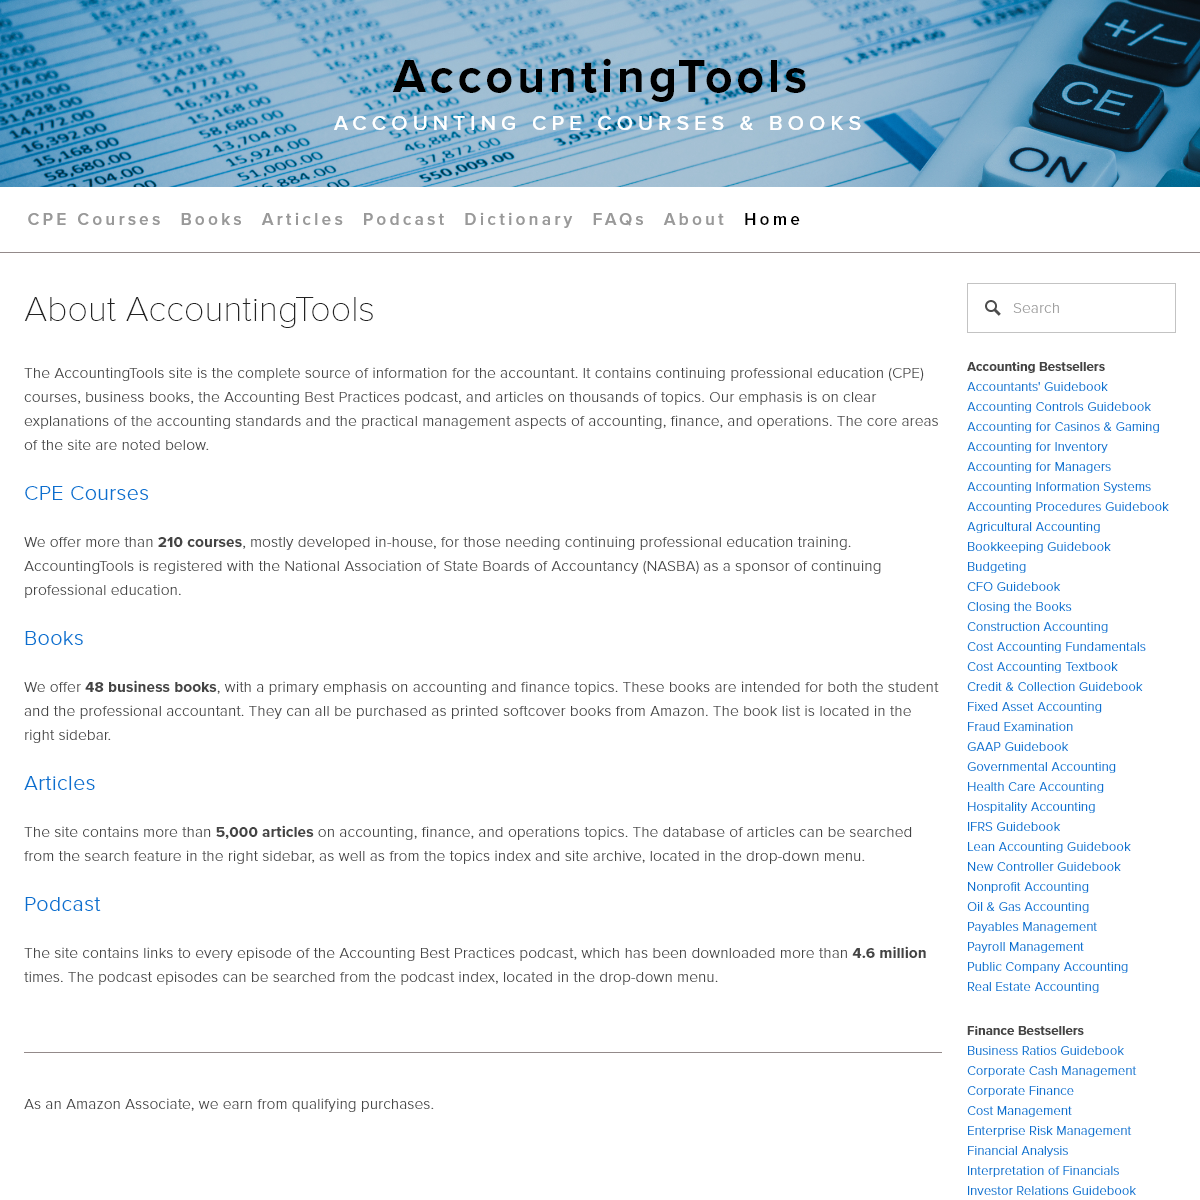 A complete backup of accountingtools.com